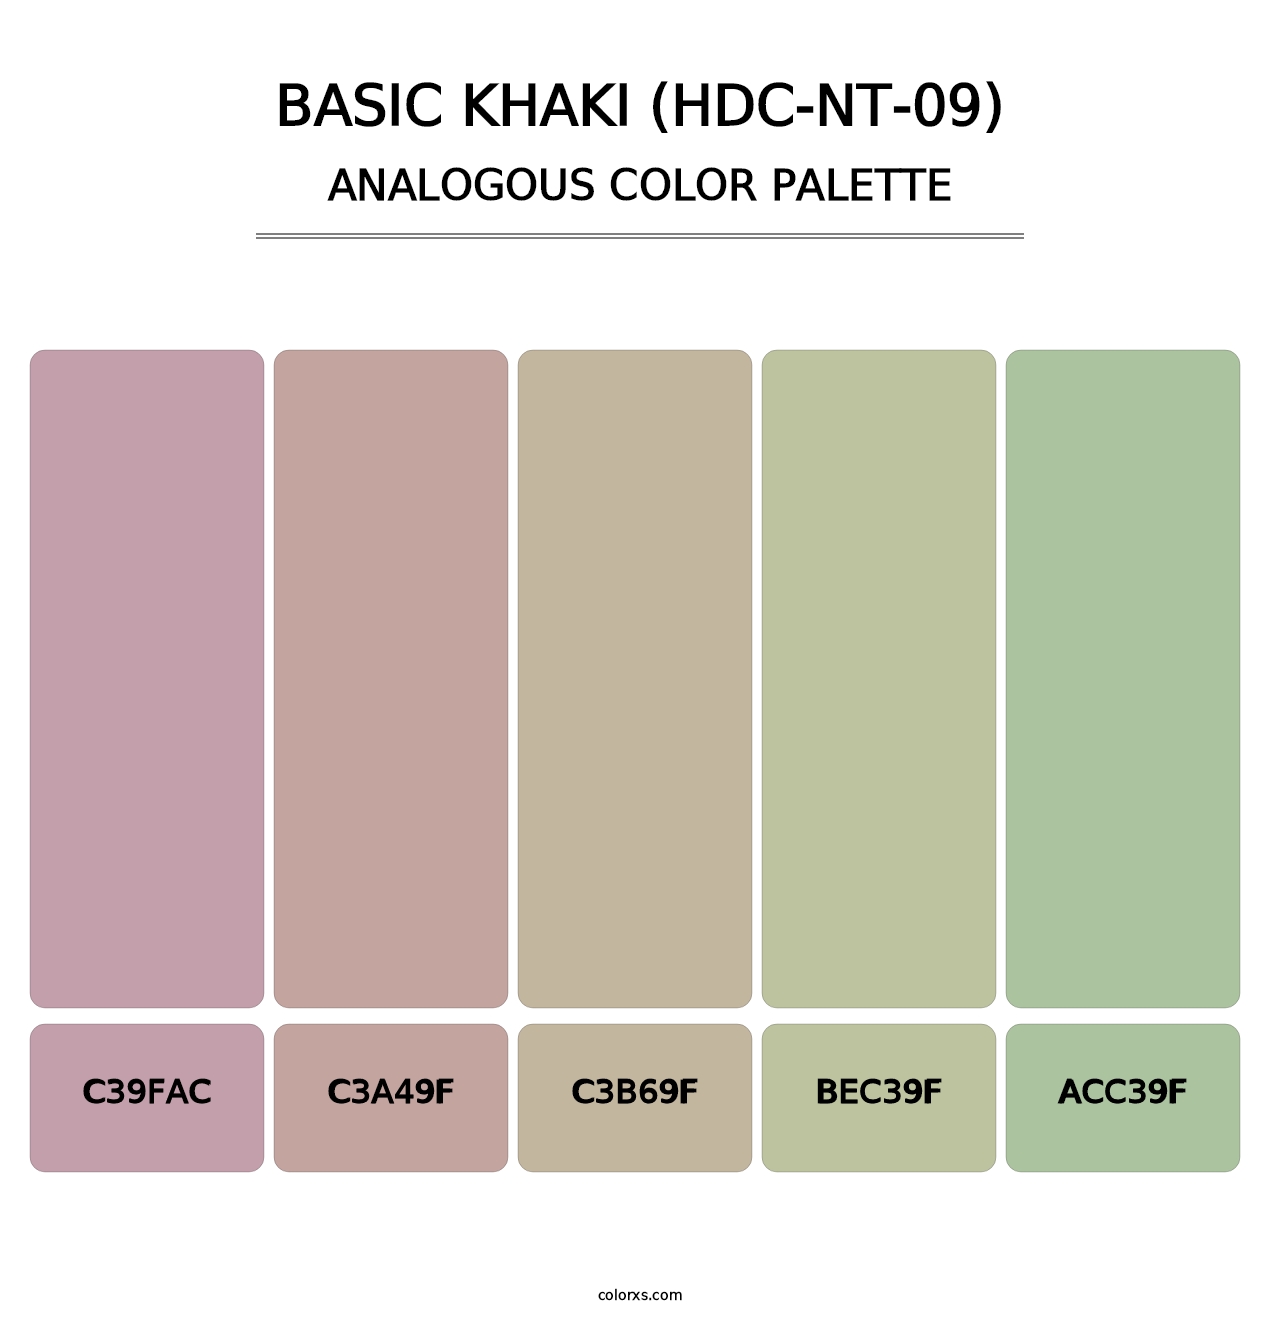 Basic Khaki (HDC-NT-09) - Analogous Color Palette